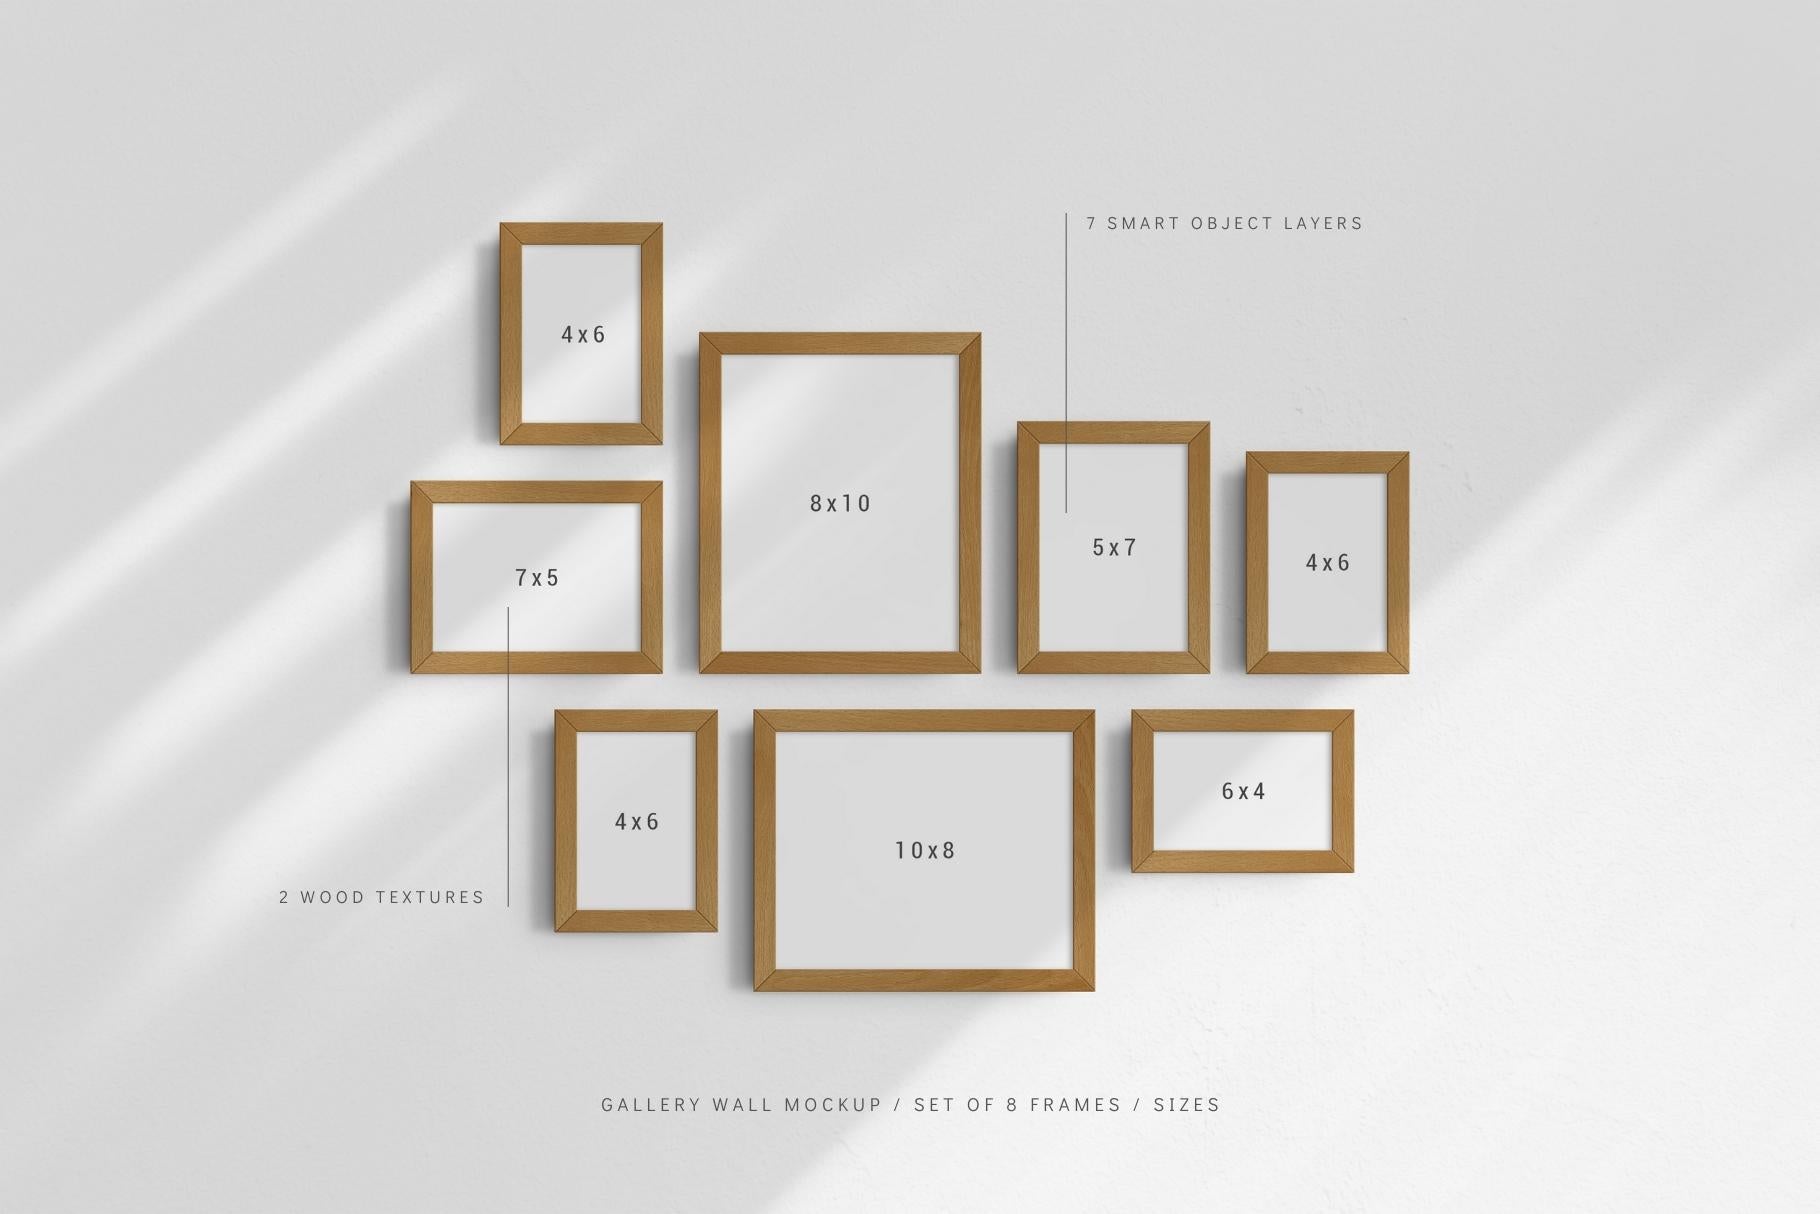 Gallery Wall Mockup | Set of 8 Frames | Frame Mockup | PSD | Sizes